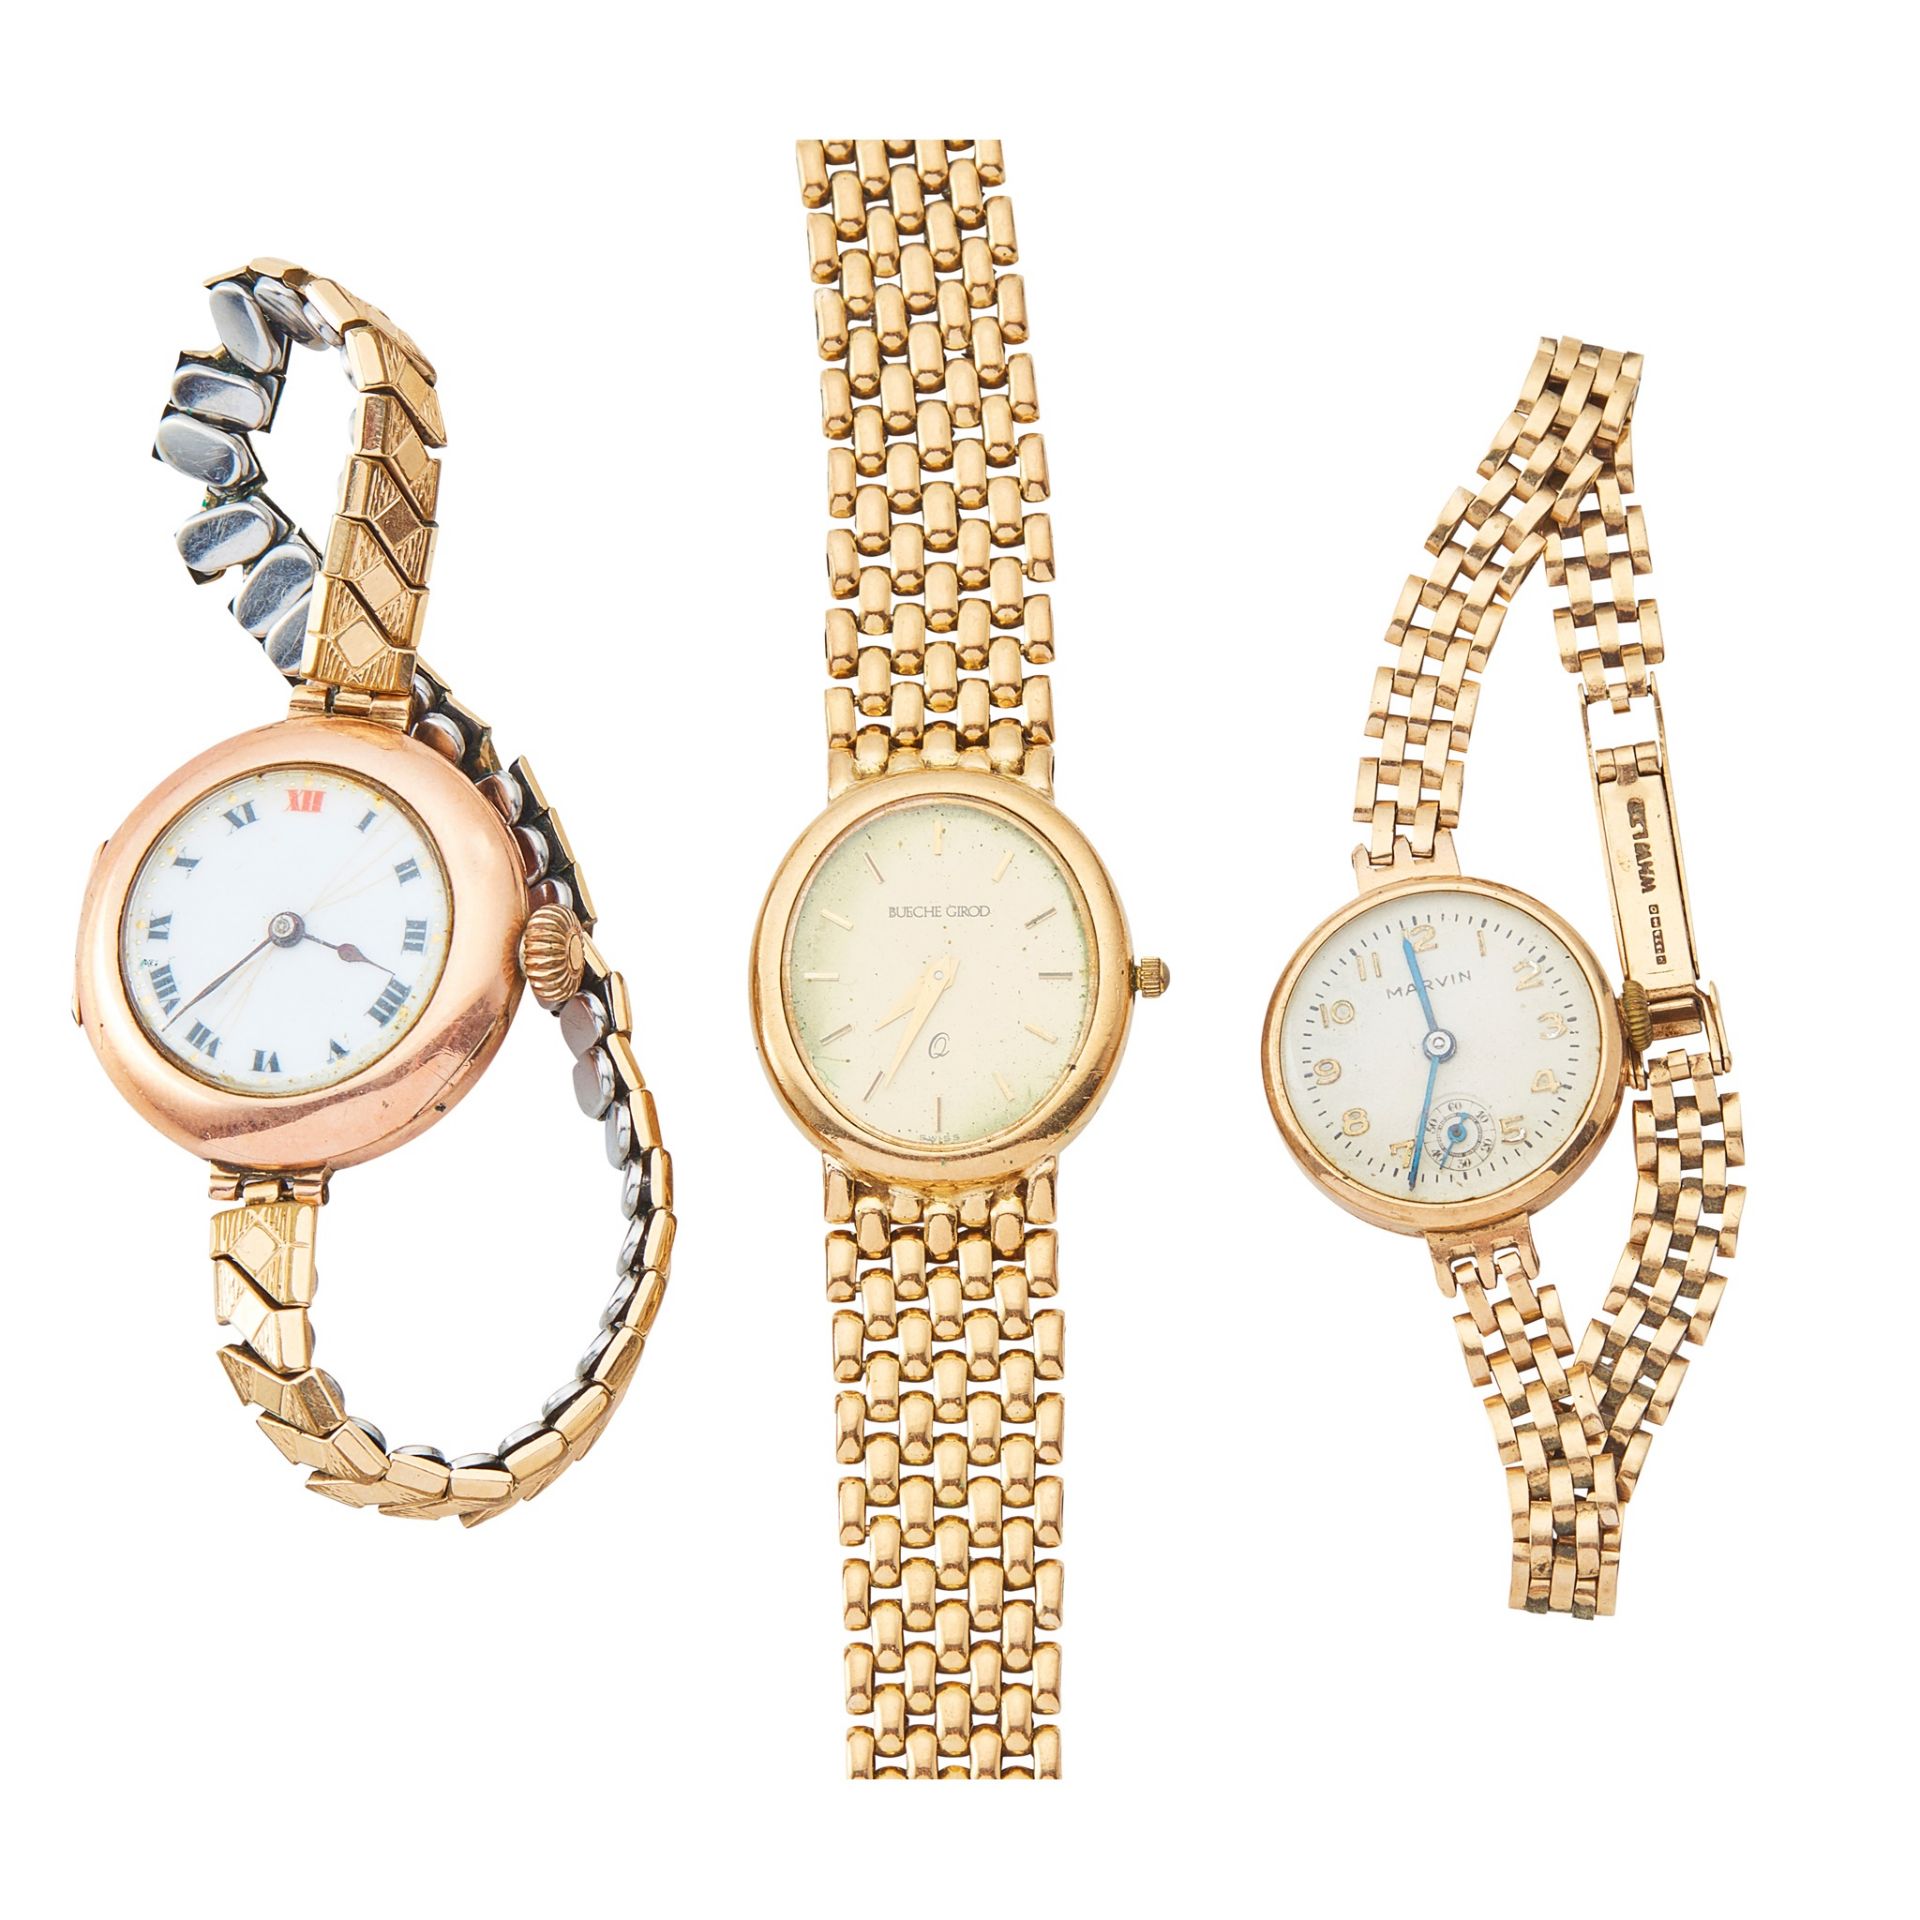 A 9ct gold lady's wrist watch, Beuche Girod